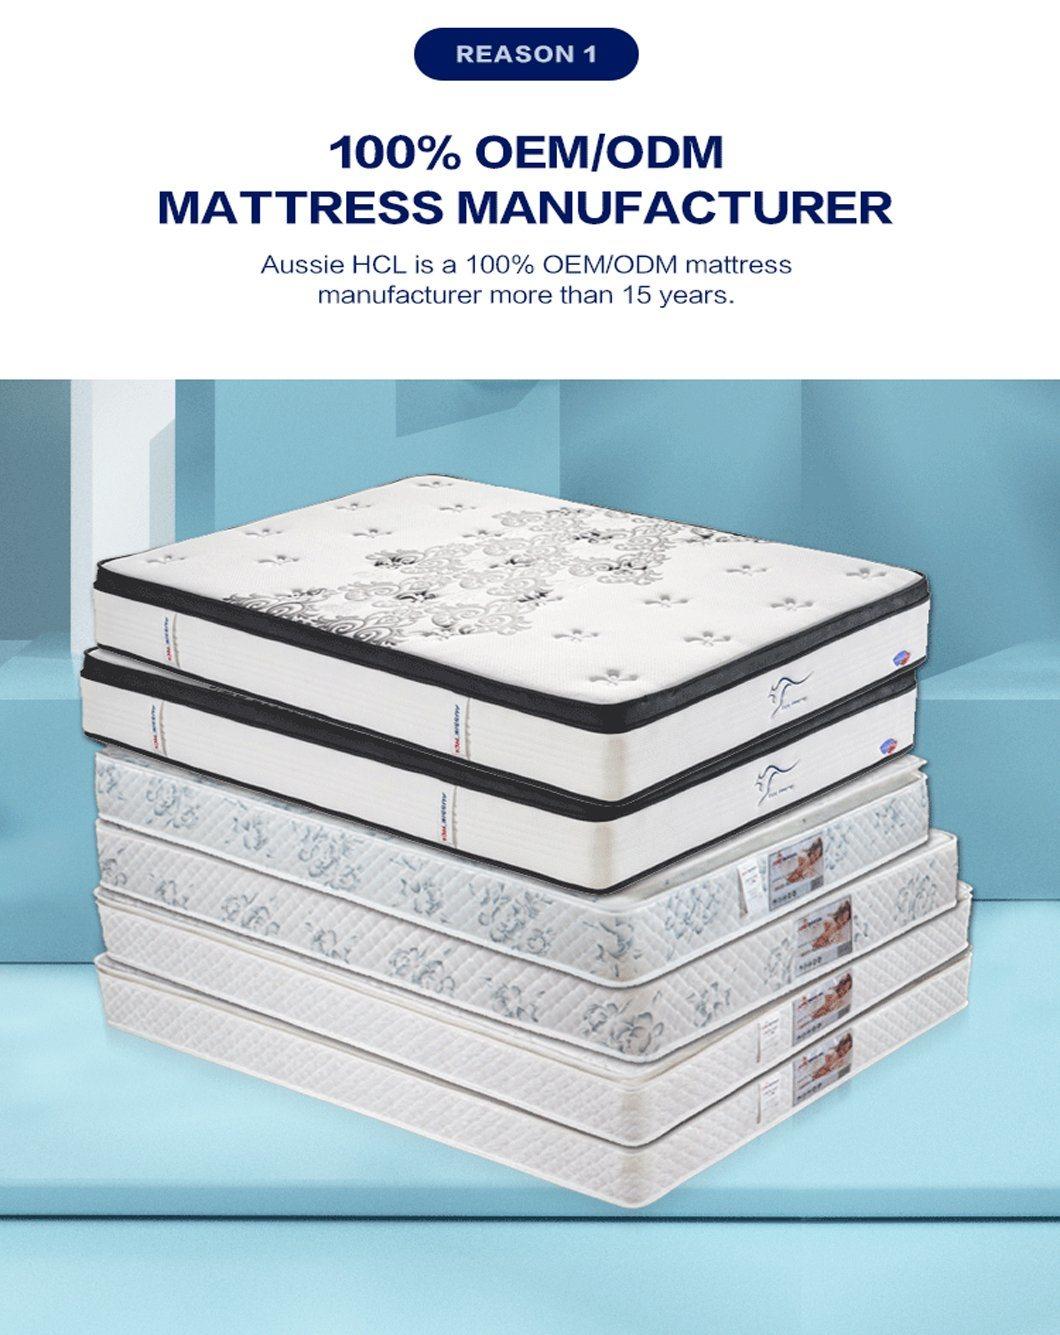 China Factory Roll Sleeping Well Full Inch Mattresses Order Online King Double Gel Memory Foam Spring Mattress